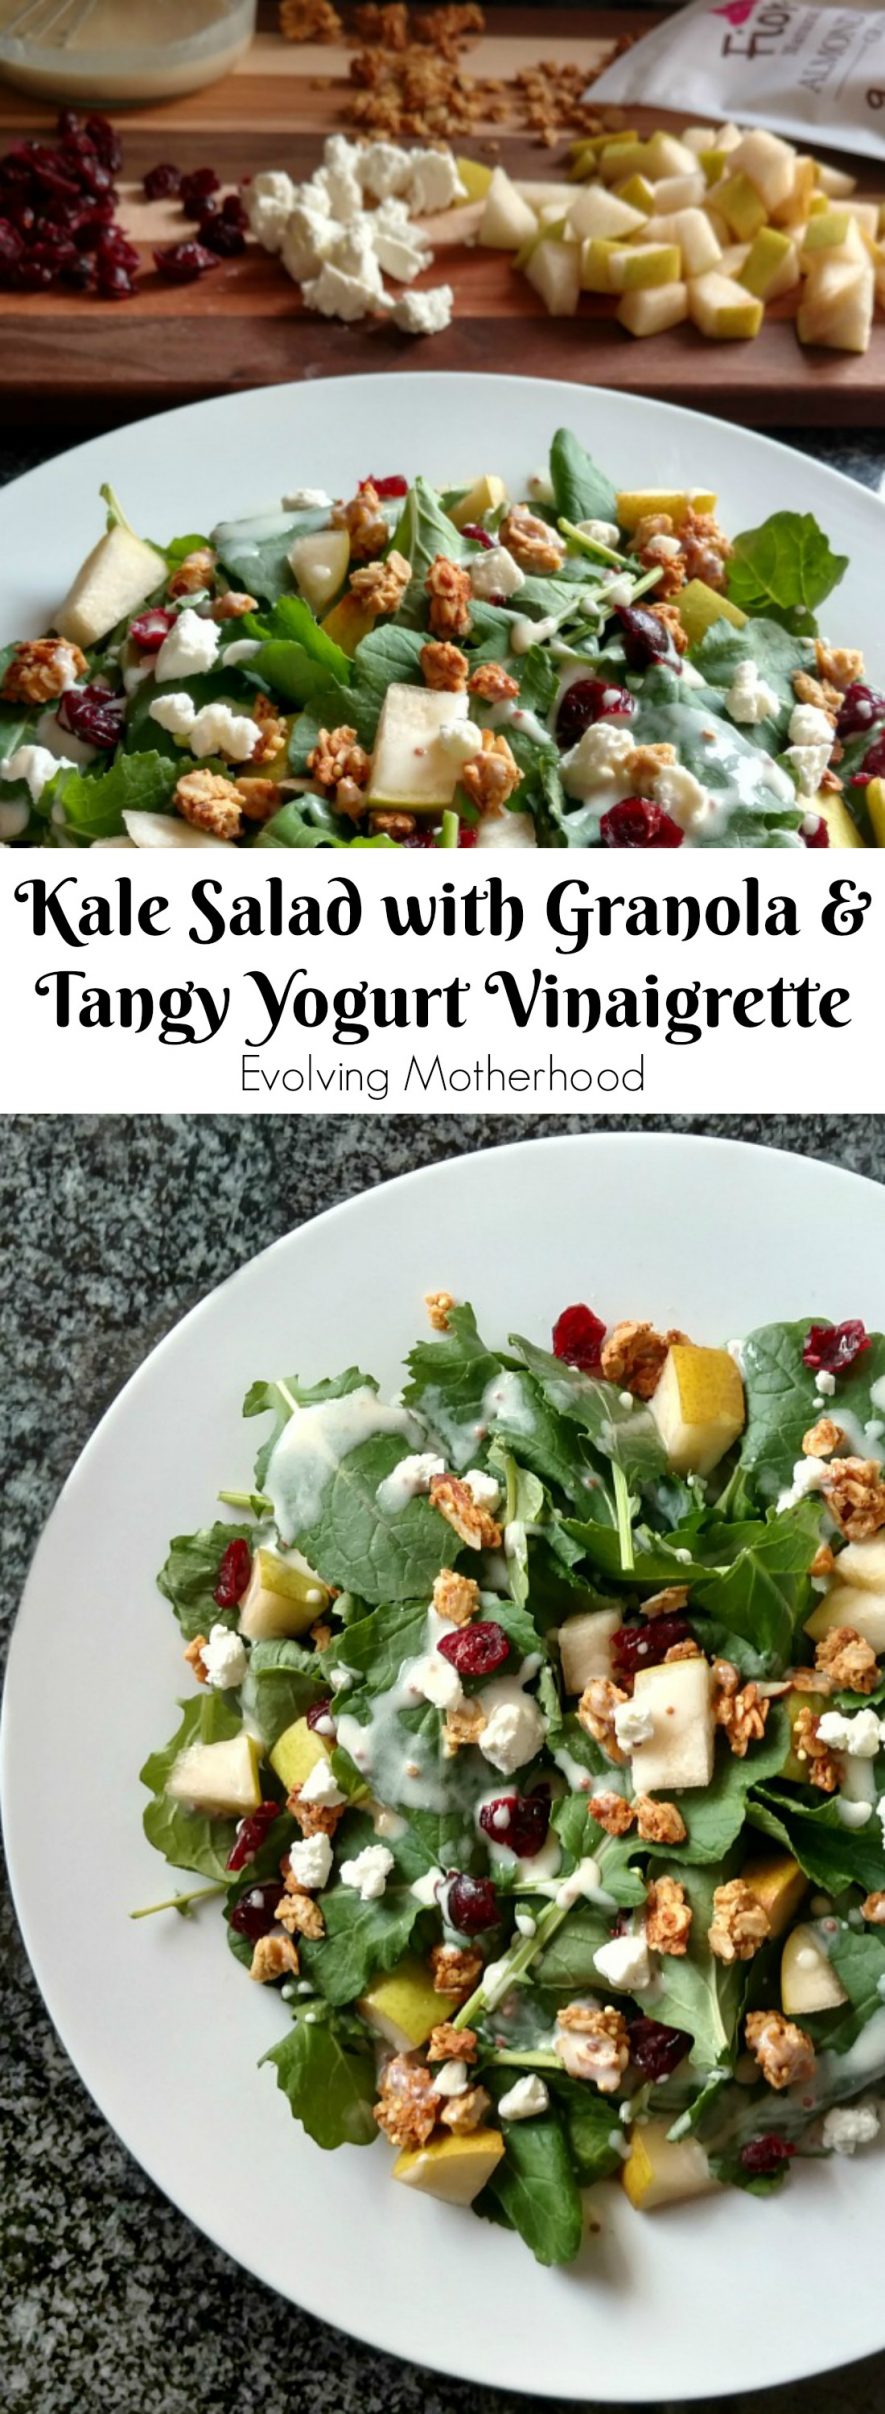 Kale salad with granola and and a tangy yogurt vinaigrette